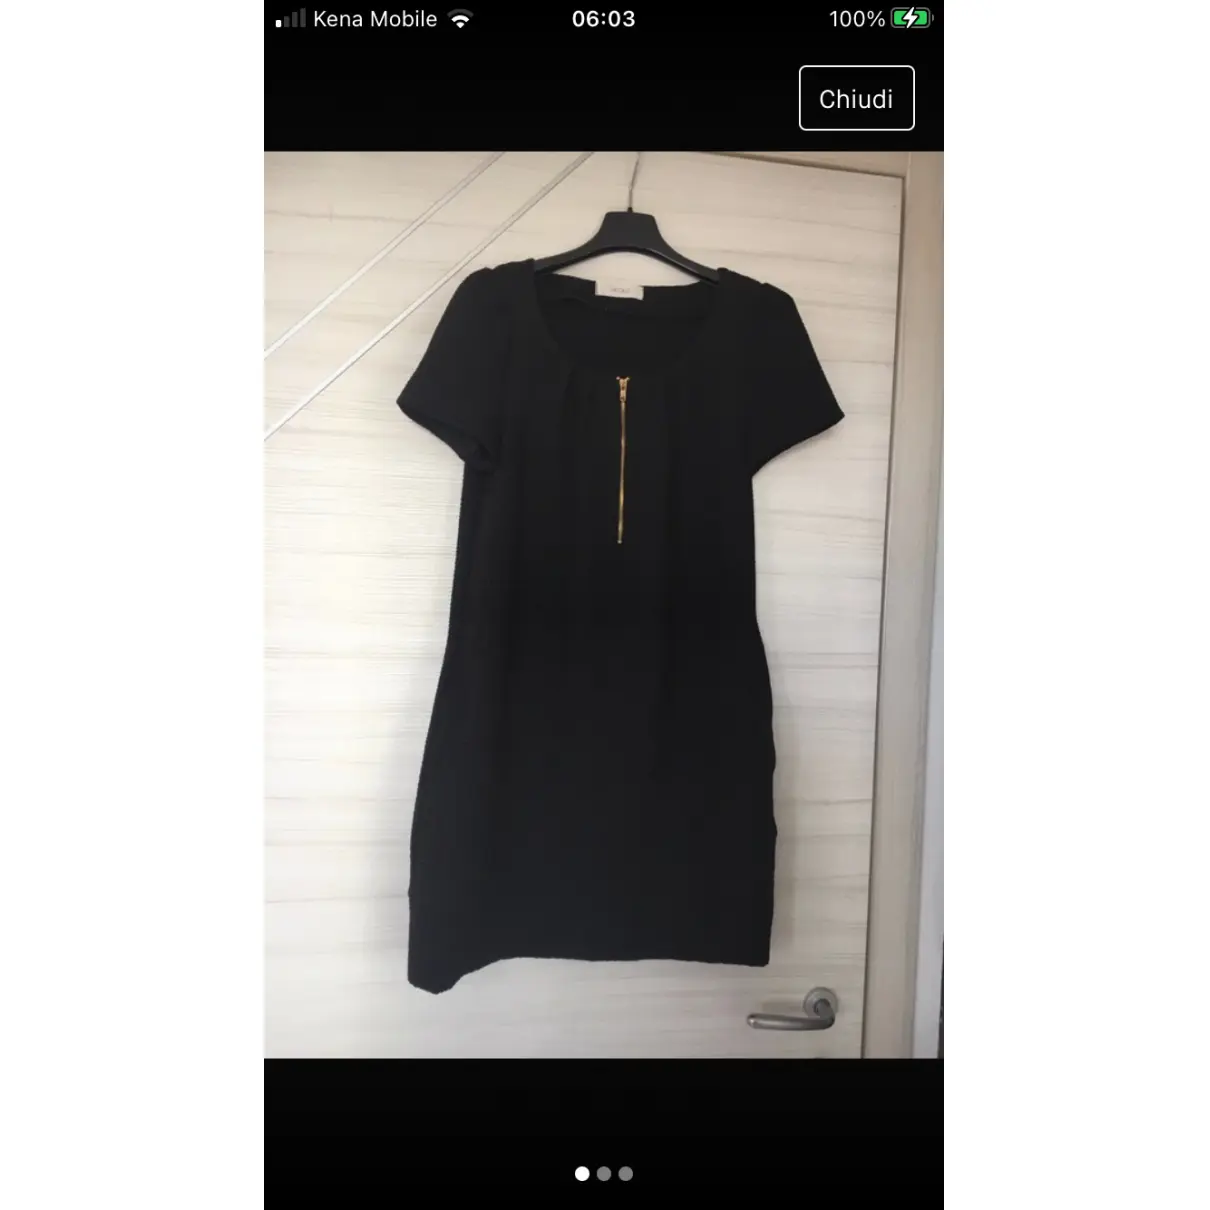 Buy Vicolo Mid-length dress online